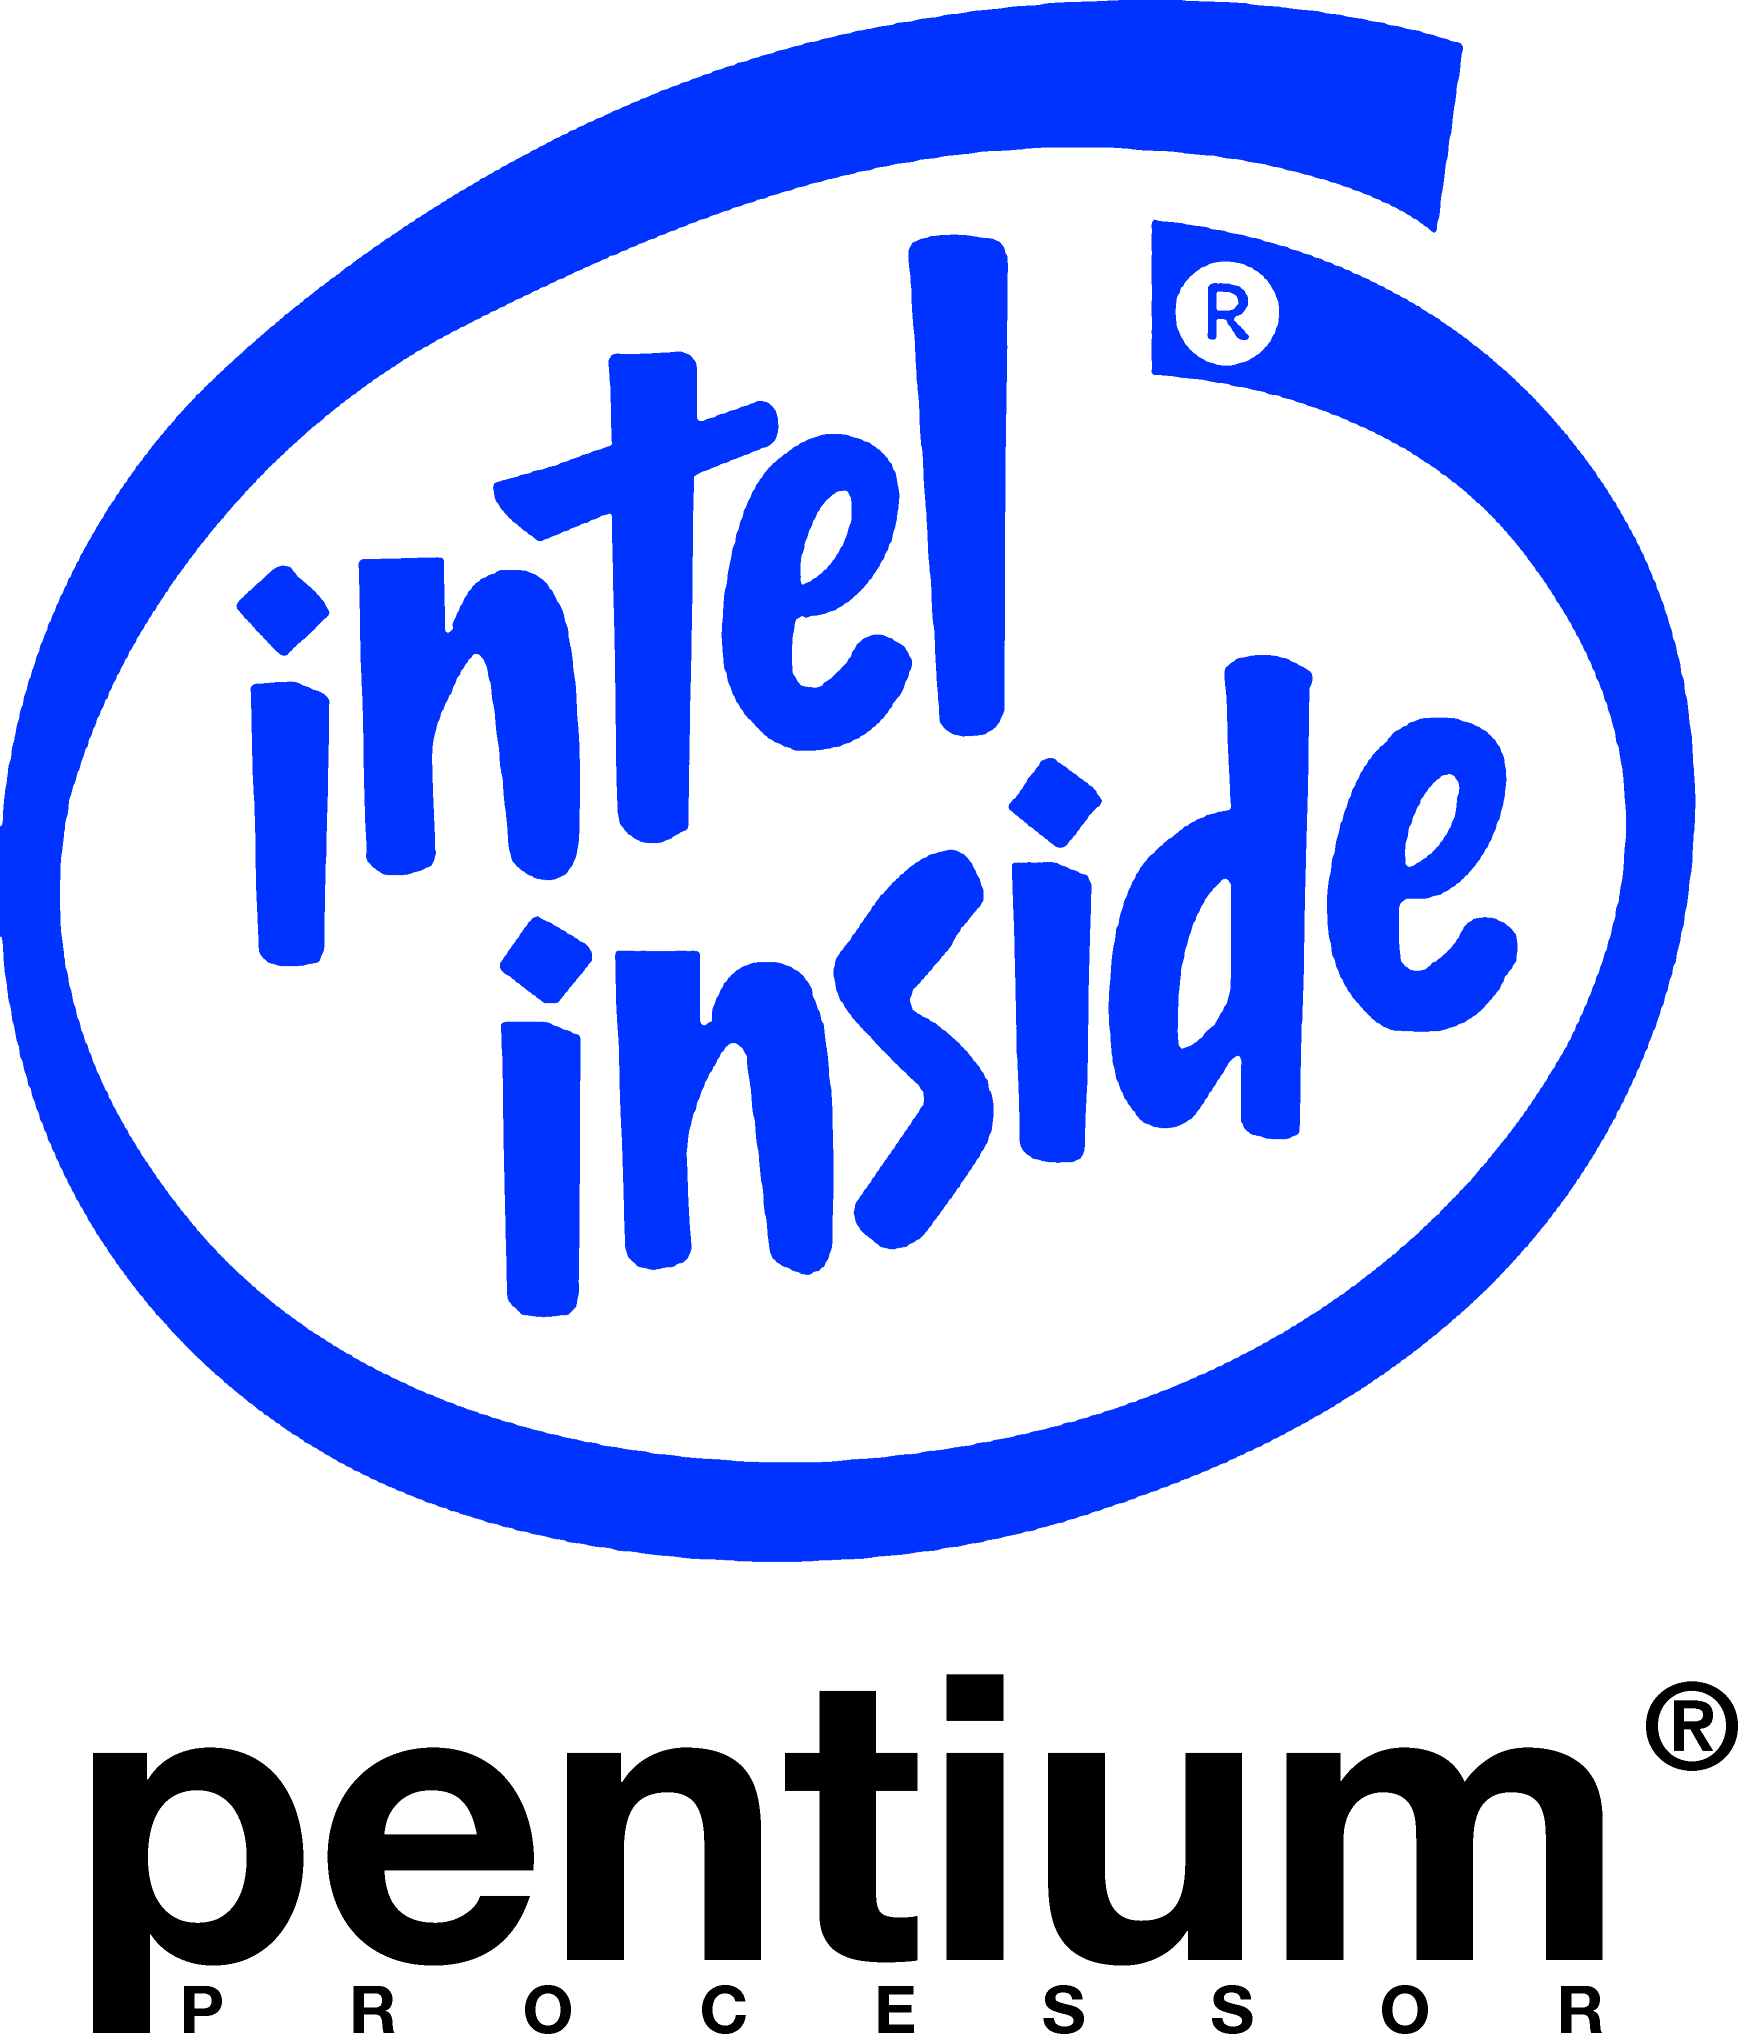 Intel Pentium Logo - Intel Pentium | Logopedia | FANDOM powered by Wikia